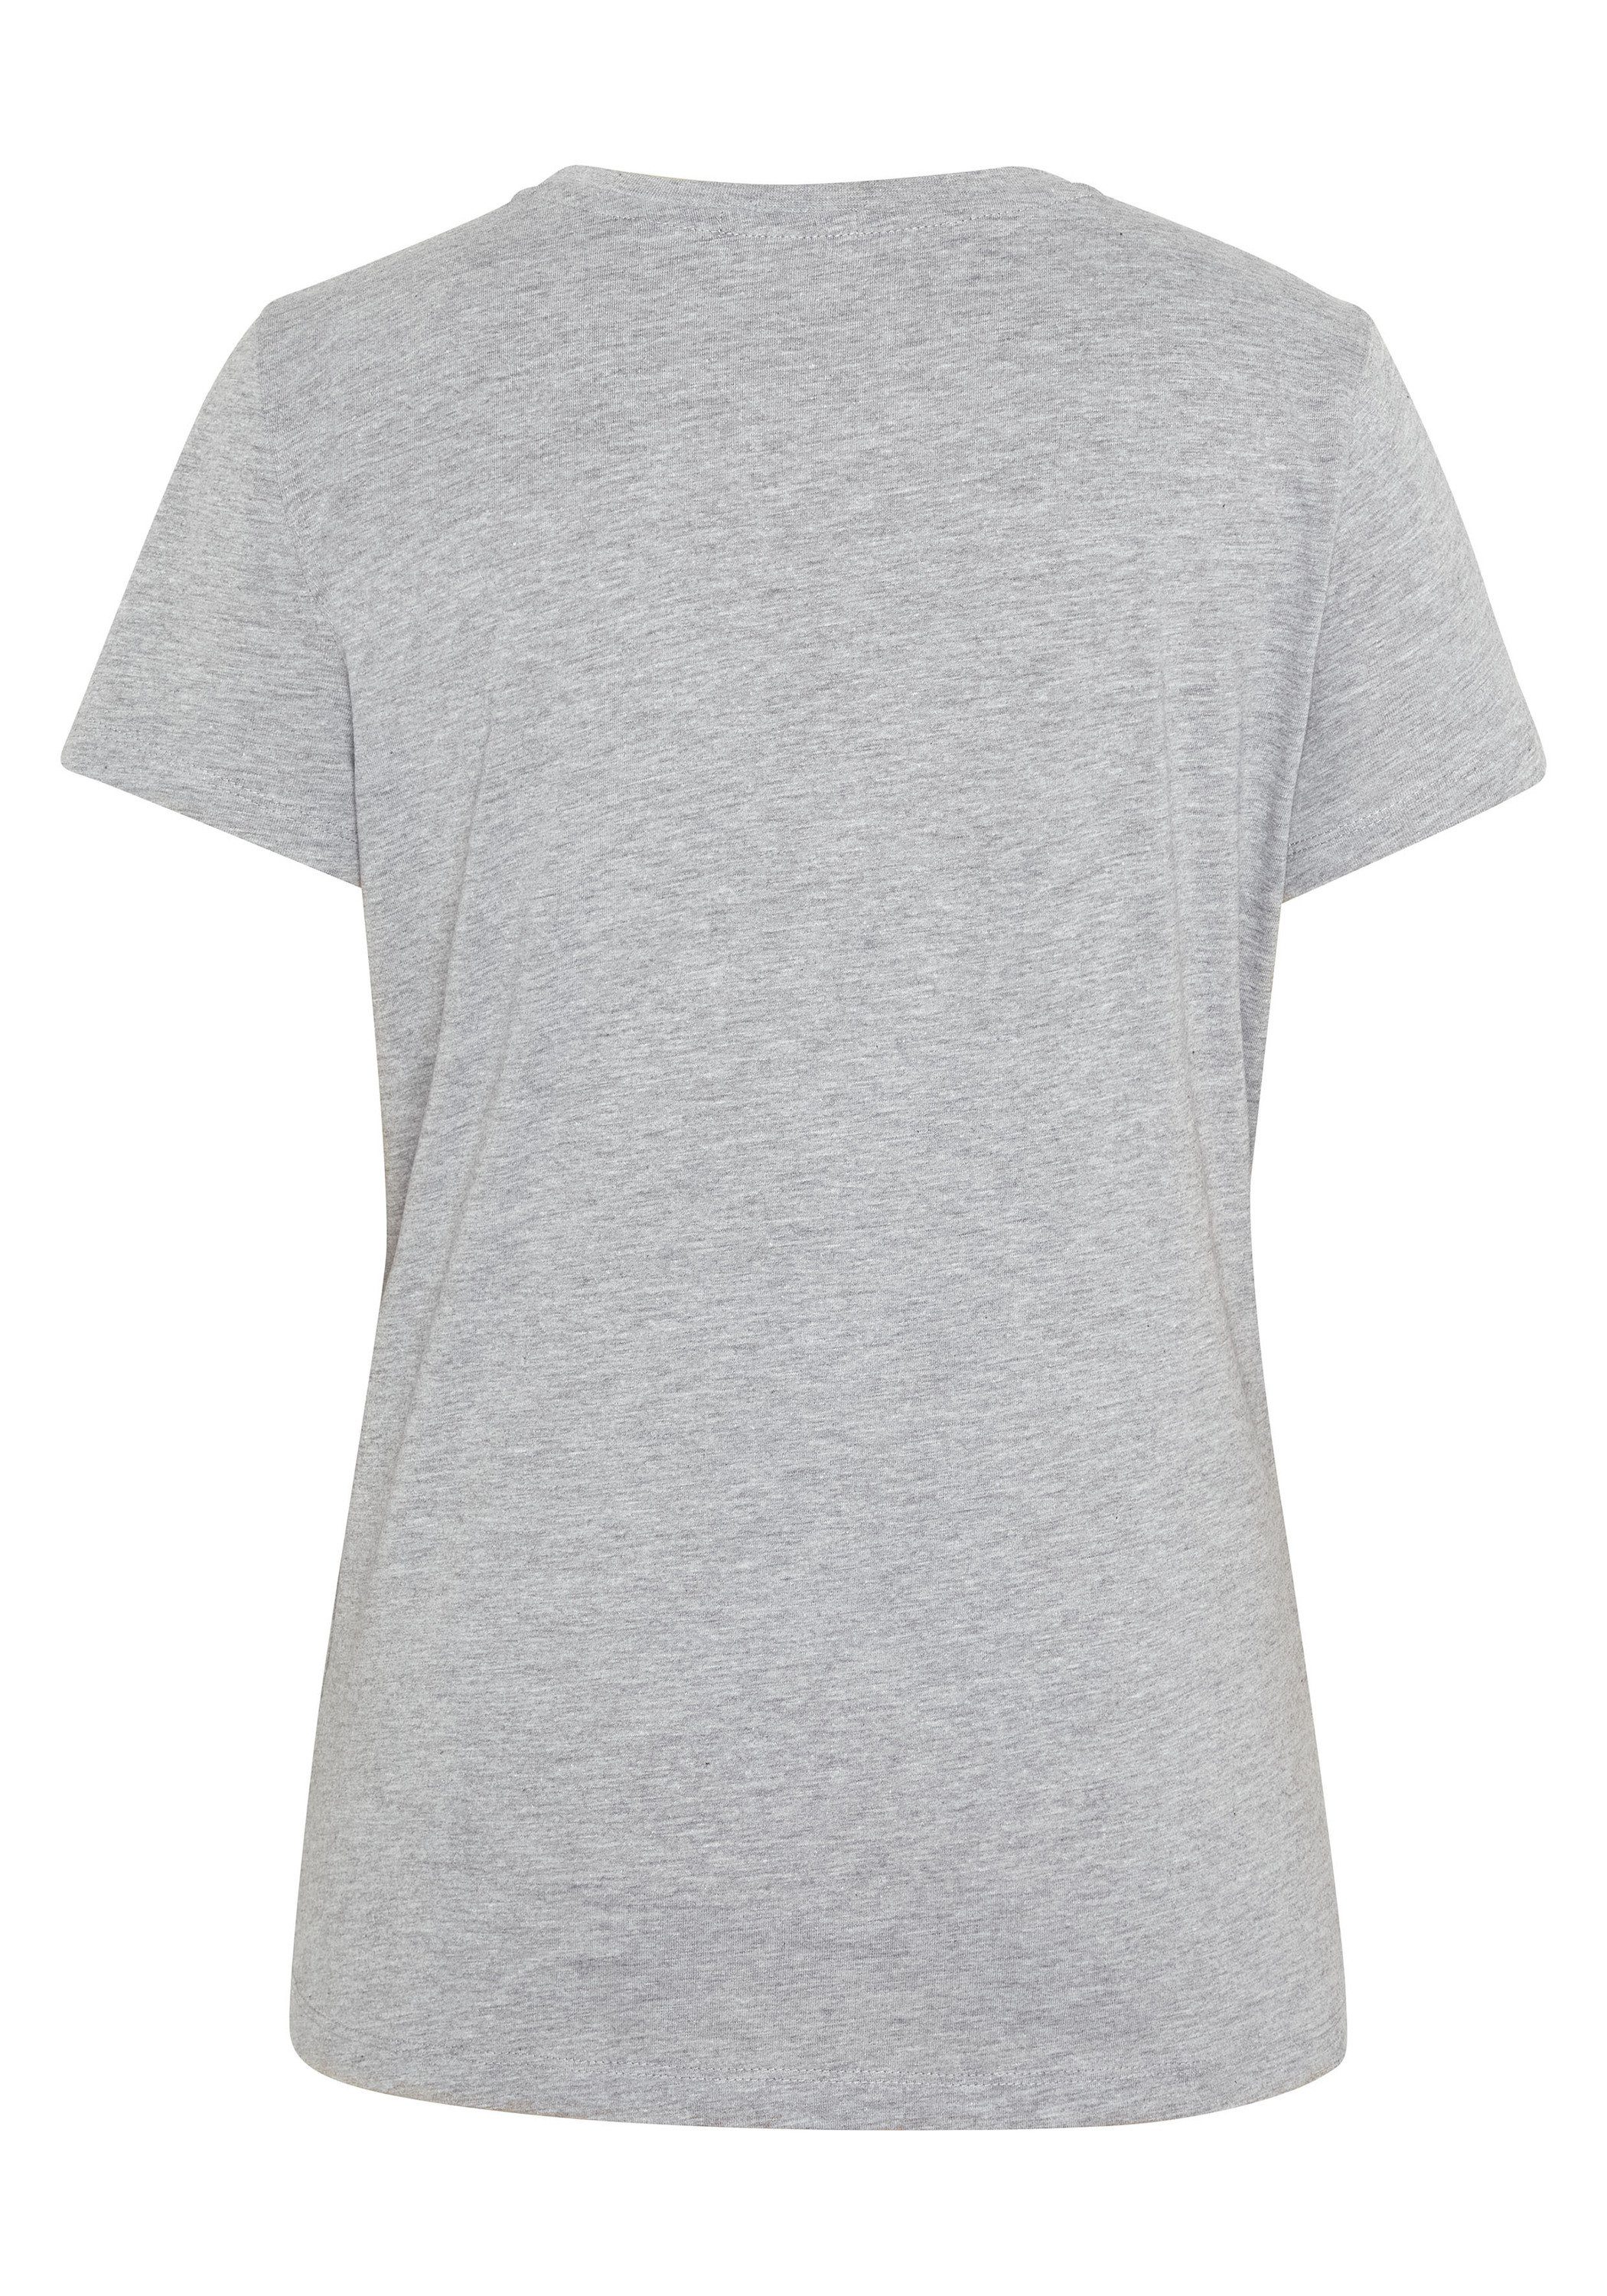 Chiemsee Print-Shirt Label-Look Melange 1 17-4402M T-Shirt im Neutral Gray